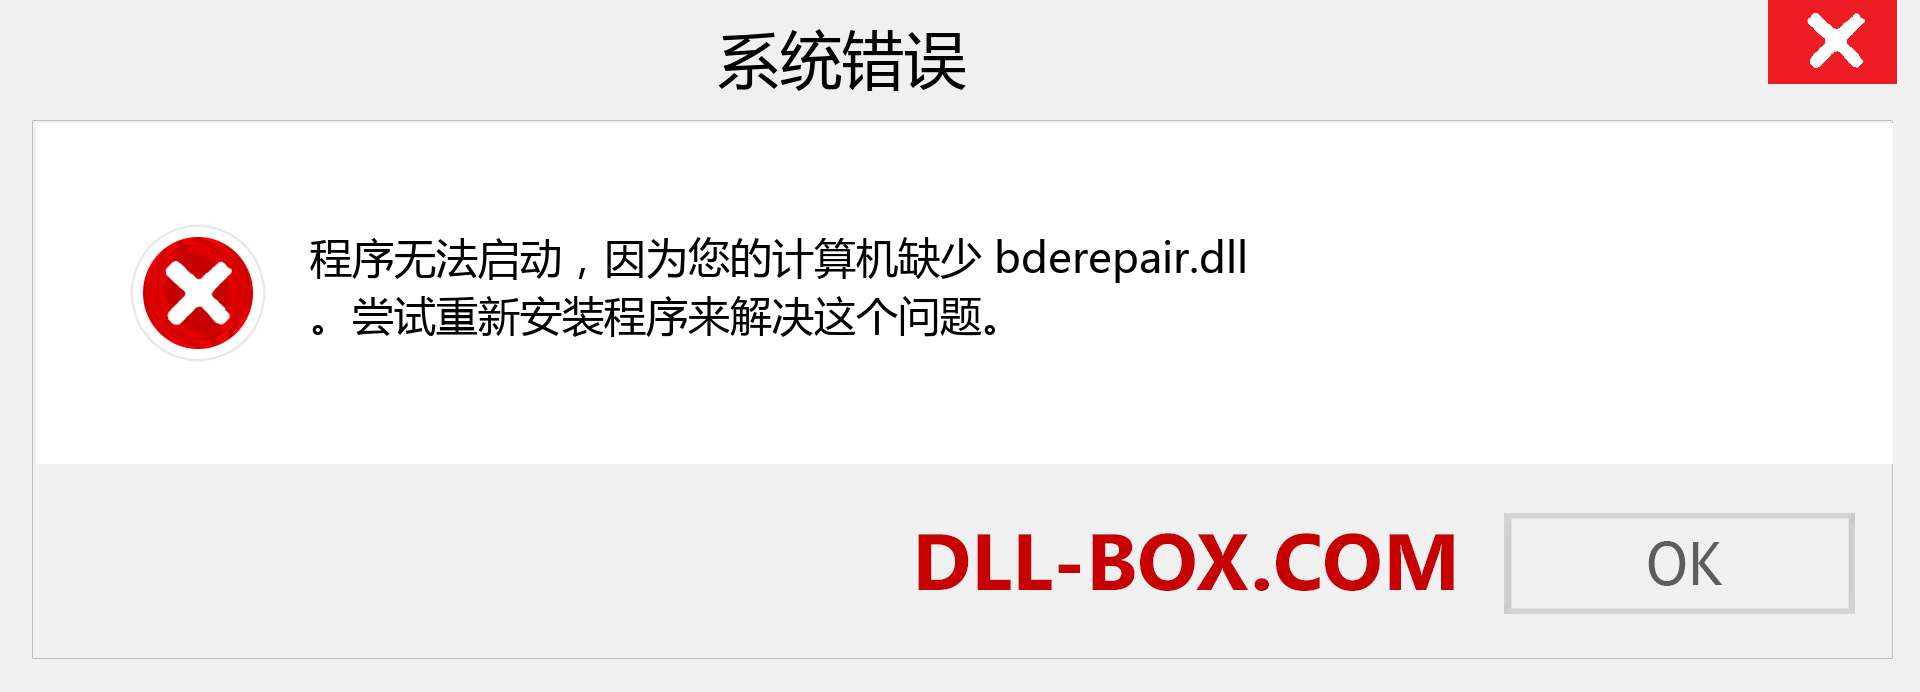 bderepair.dll 文件丢失？。 适用于 Windows 7、8、10 的下载 - 修复 Windows、照片、图像上的 bderepair dll 丢失错误